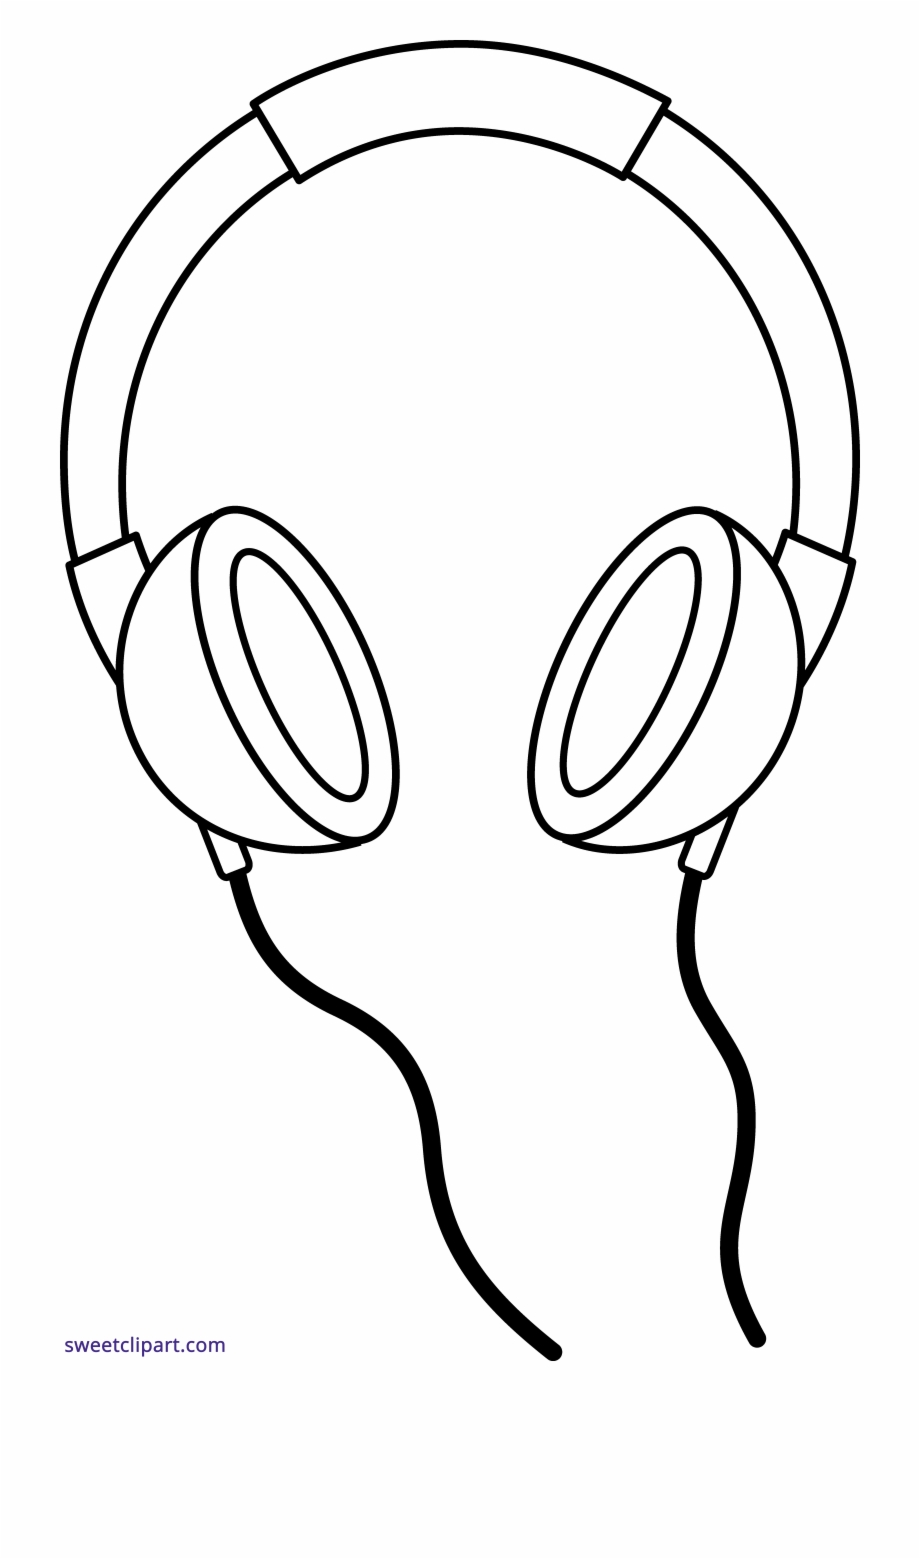 headphones clipart artistic